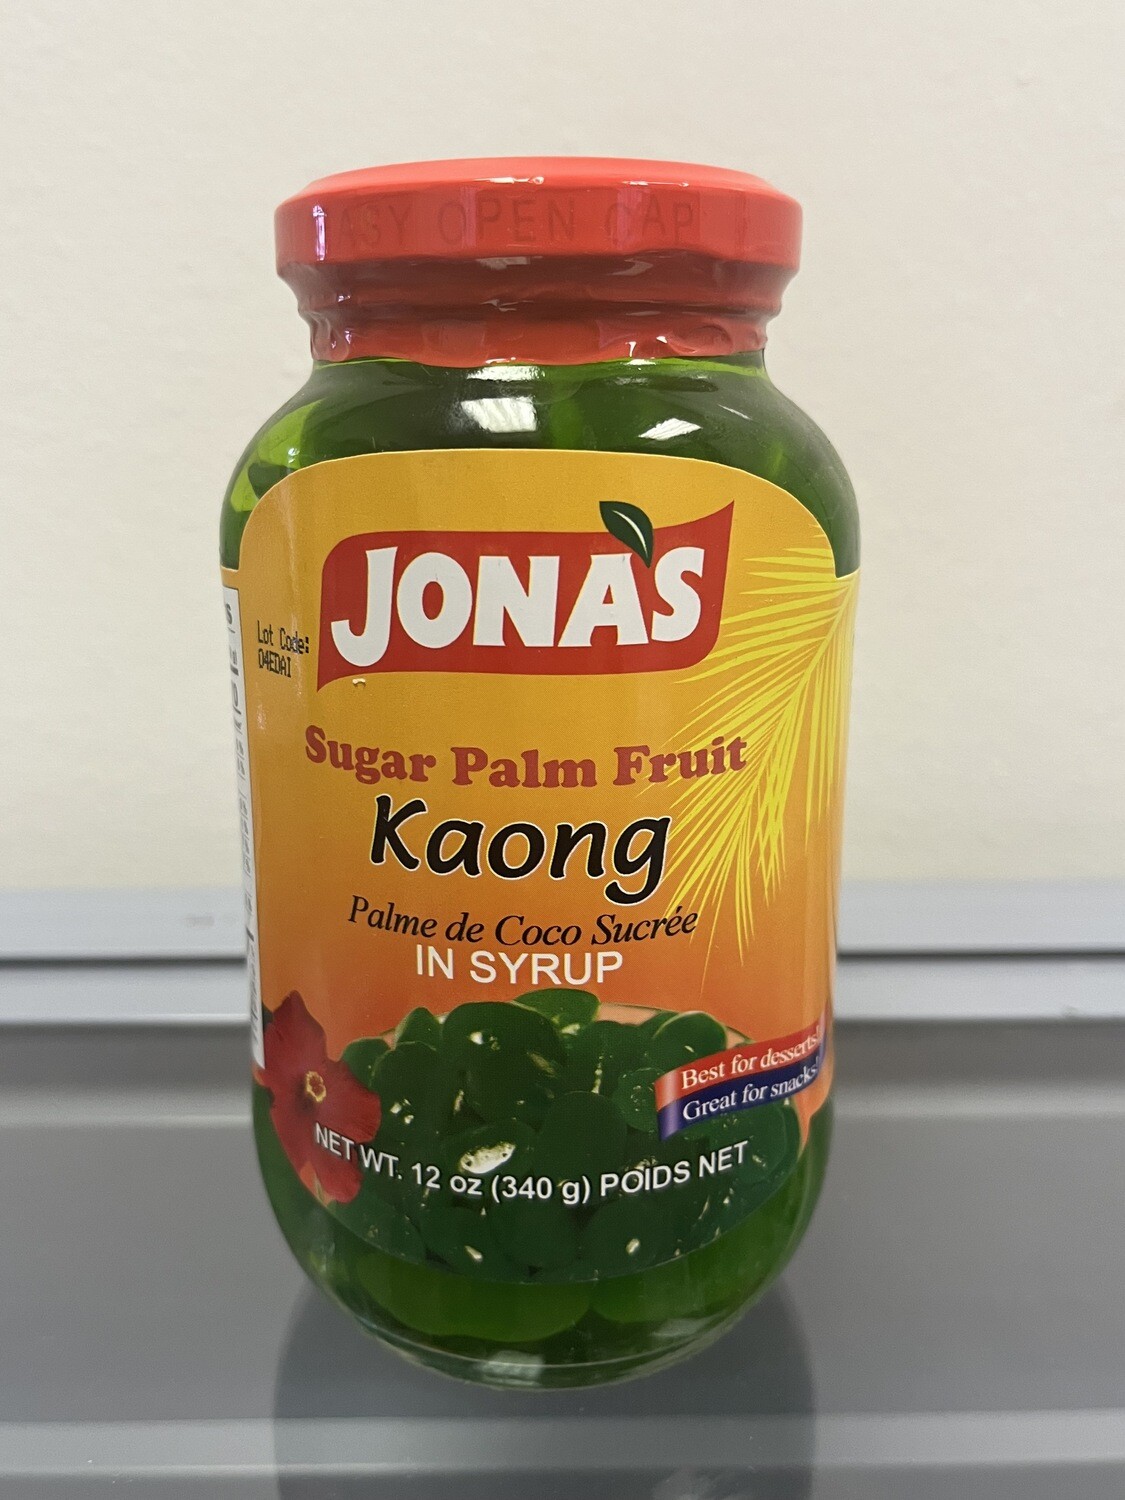 Jonas Kaong green